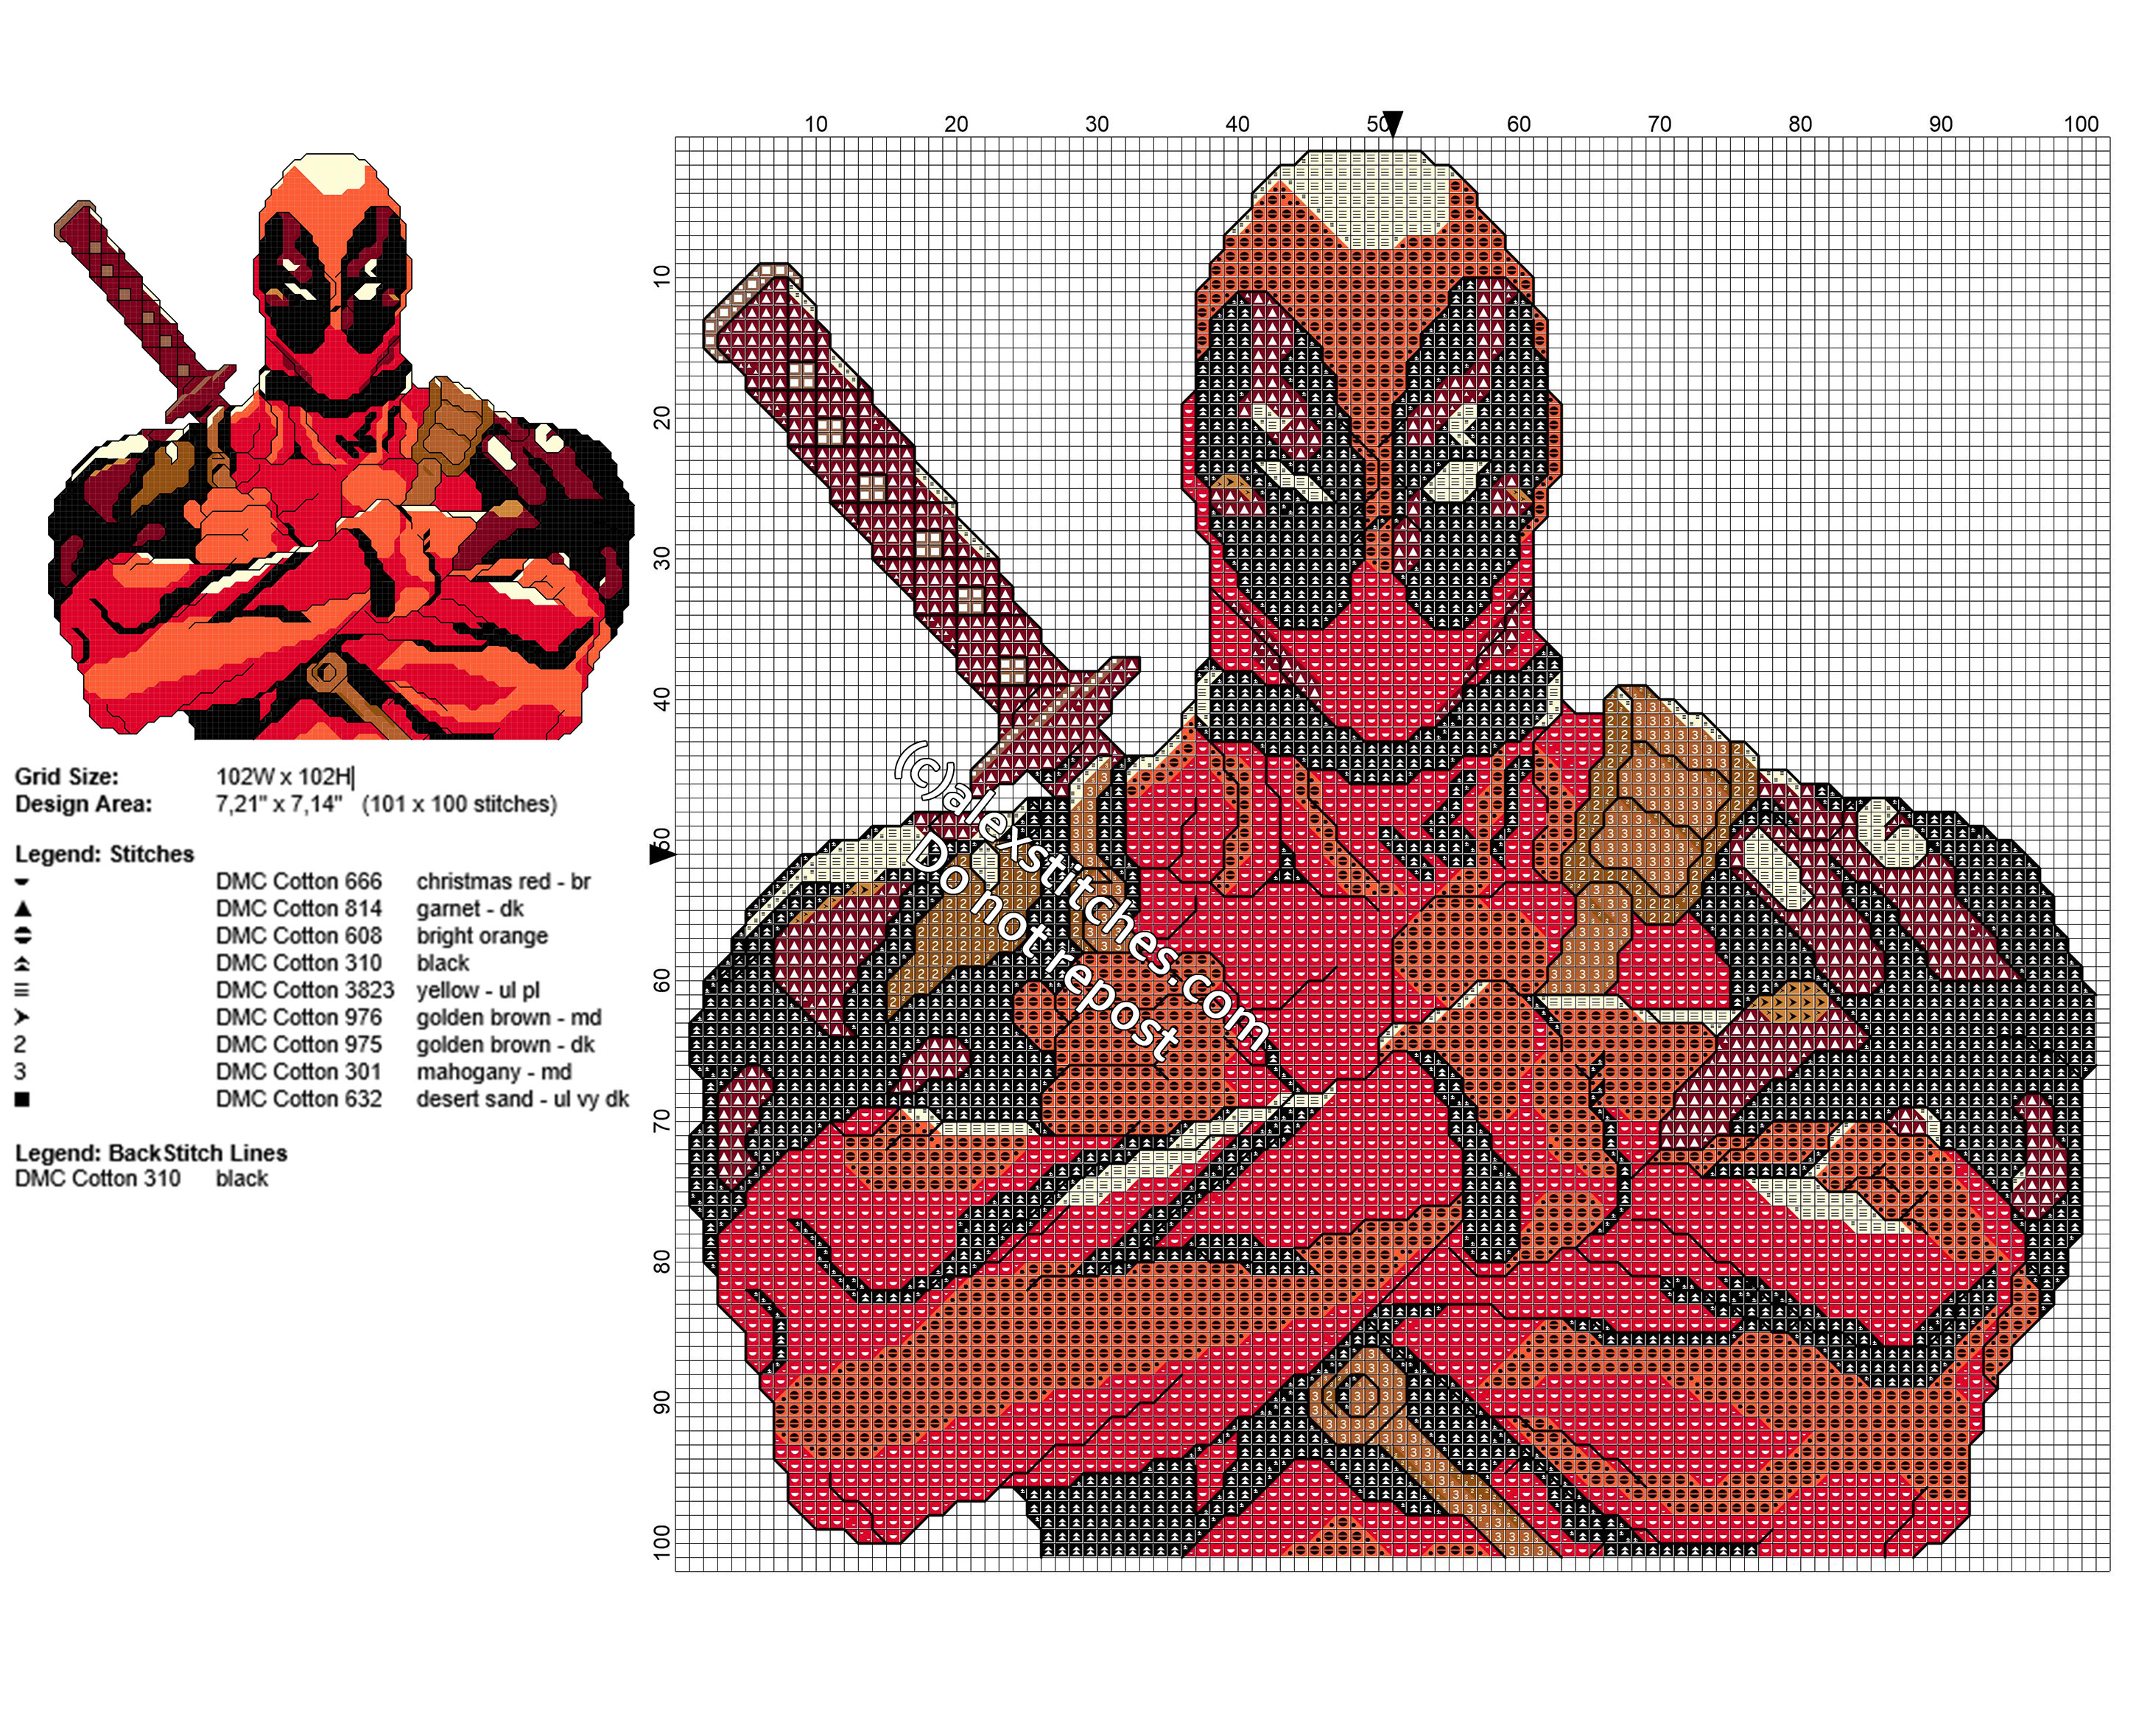 Deadpool free cross stitch pattern with back stitch